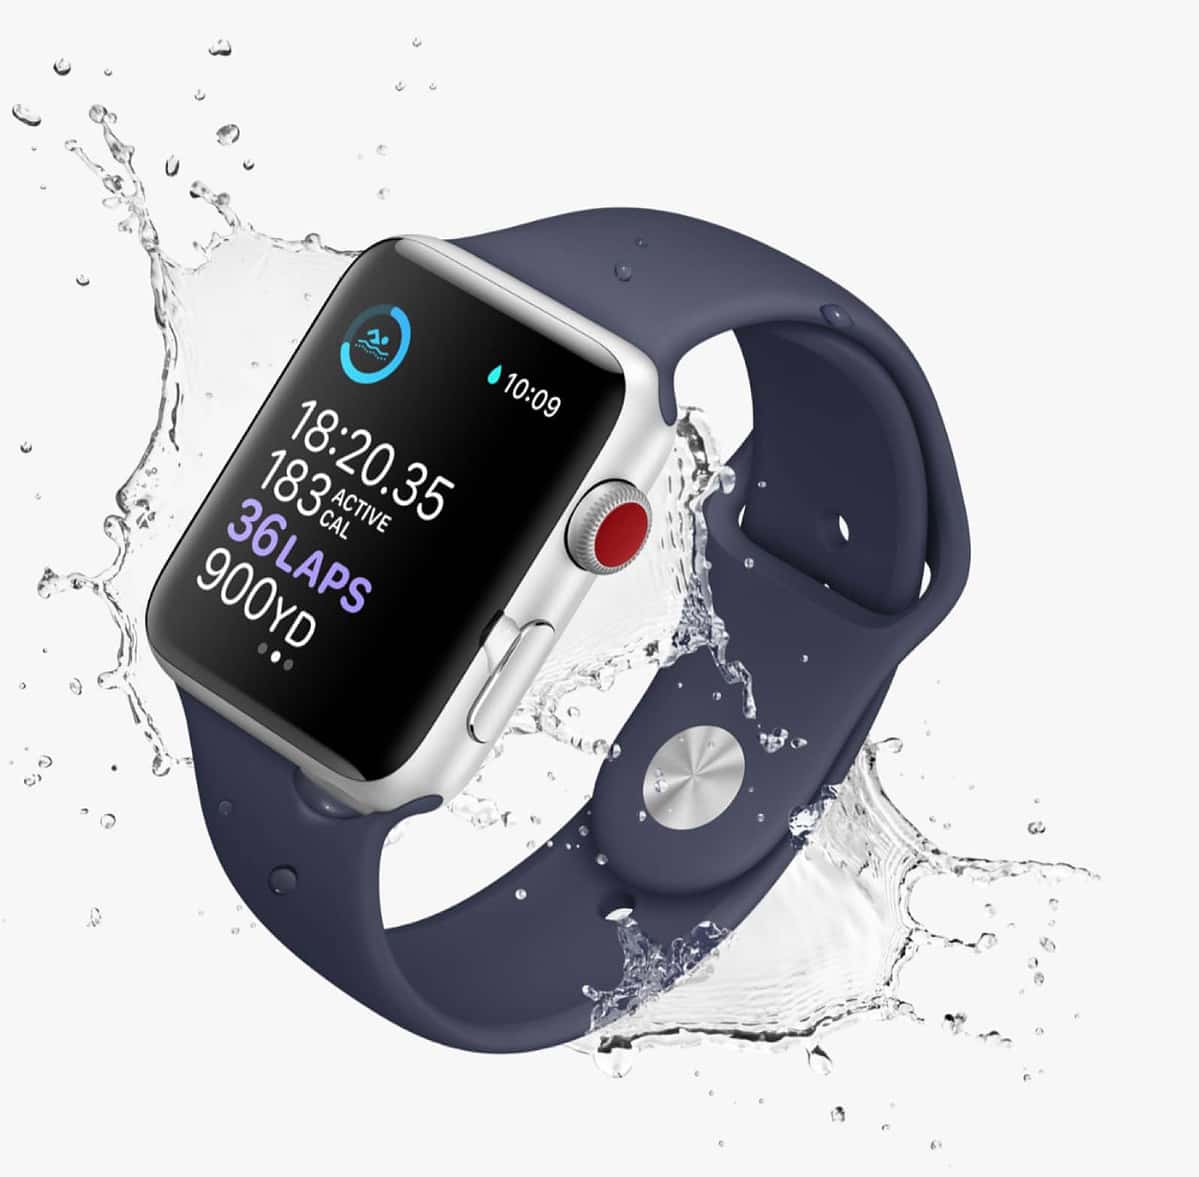 Apple Watch LTE image.